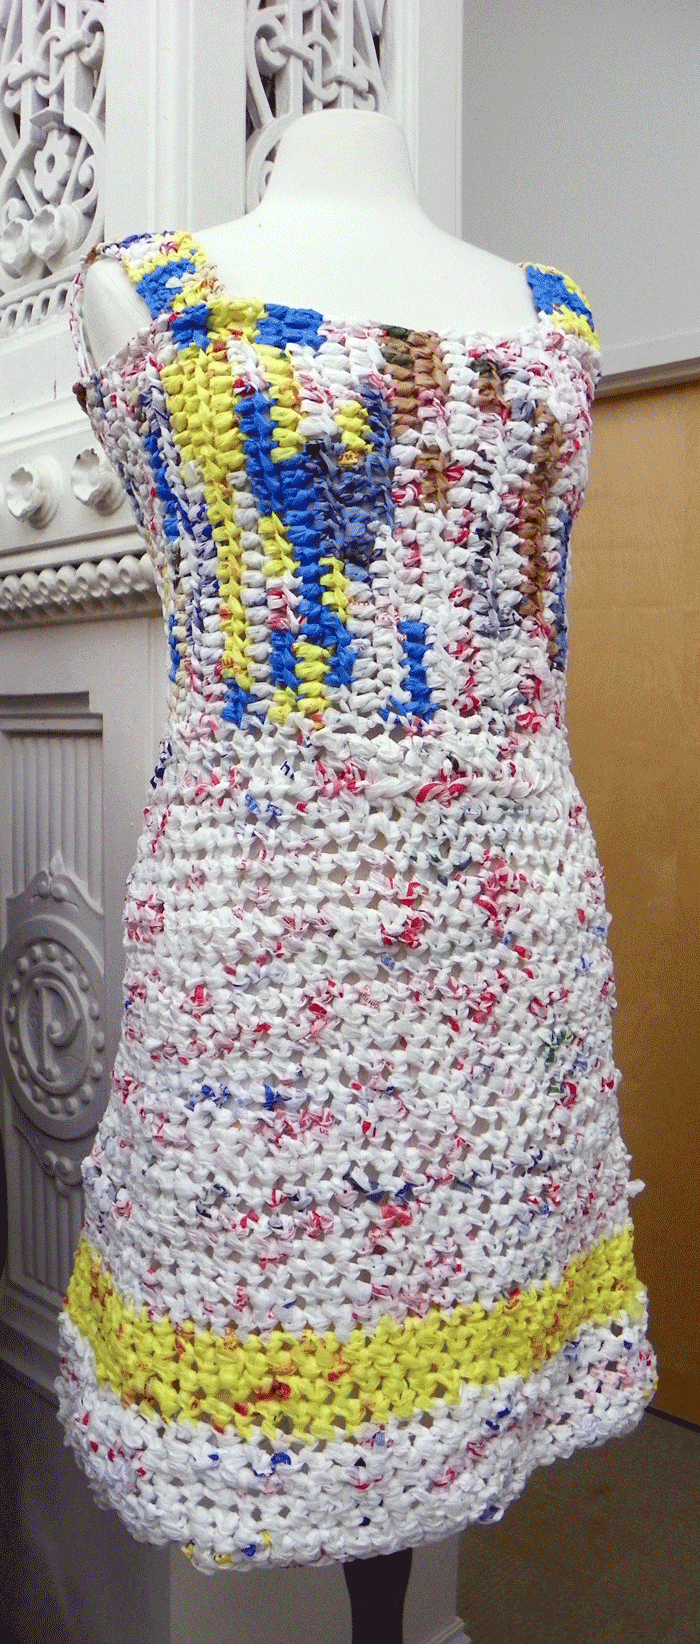 Melissa Madonni Haims, Plarn Dress, plastic bags, ECO+FASHION, Art Gallery at City Hall